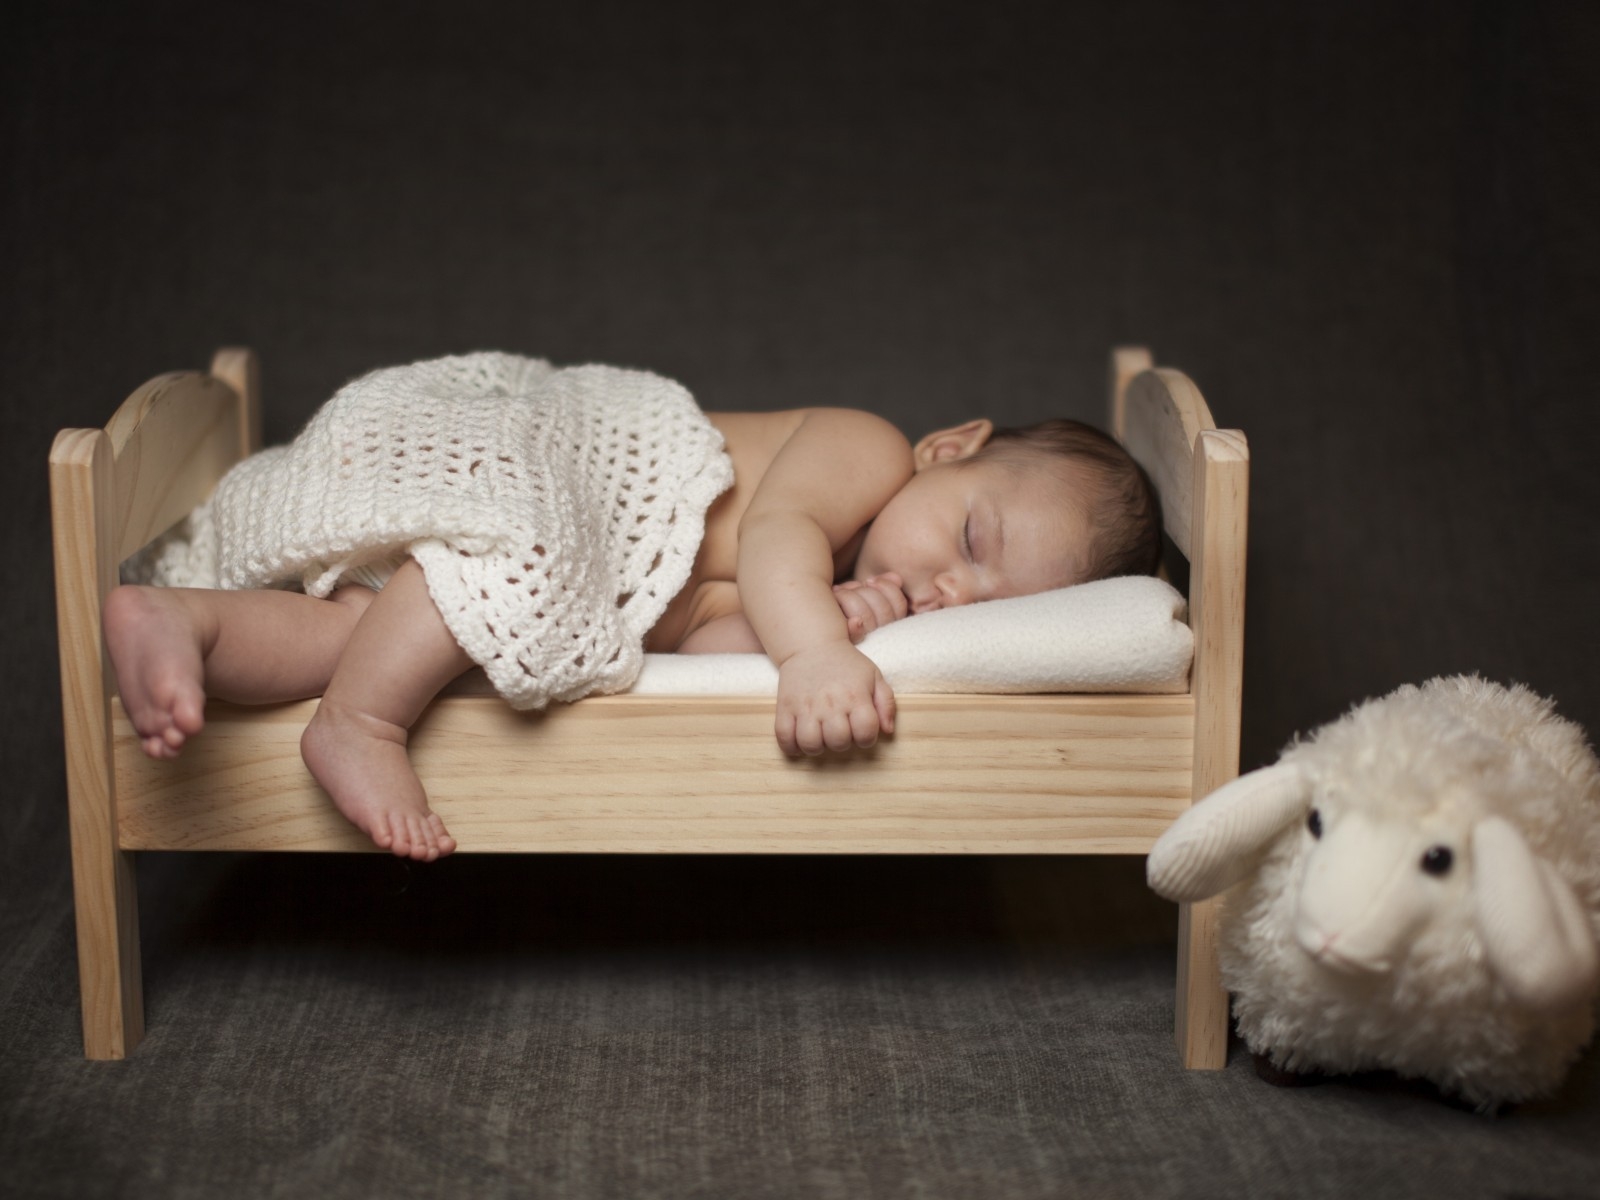 Baby Boy Sleeping for 1600 x 1200 resolution